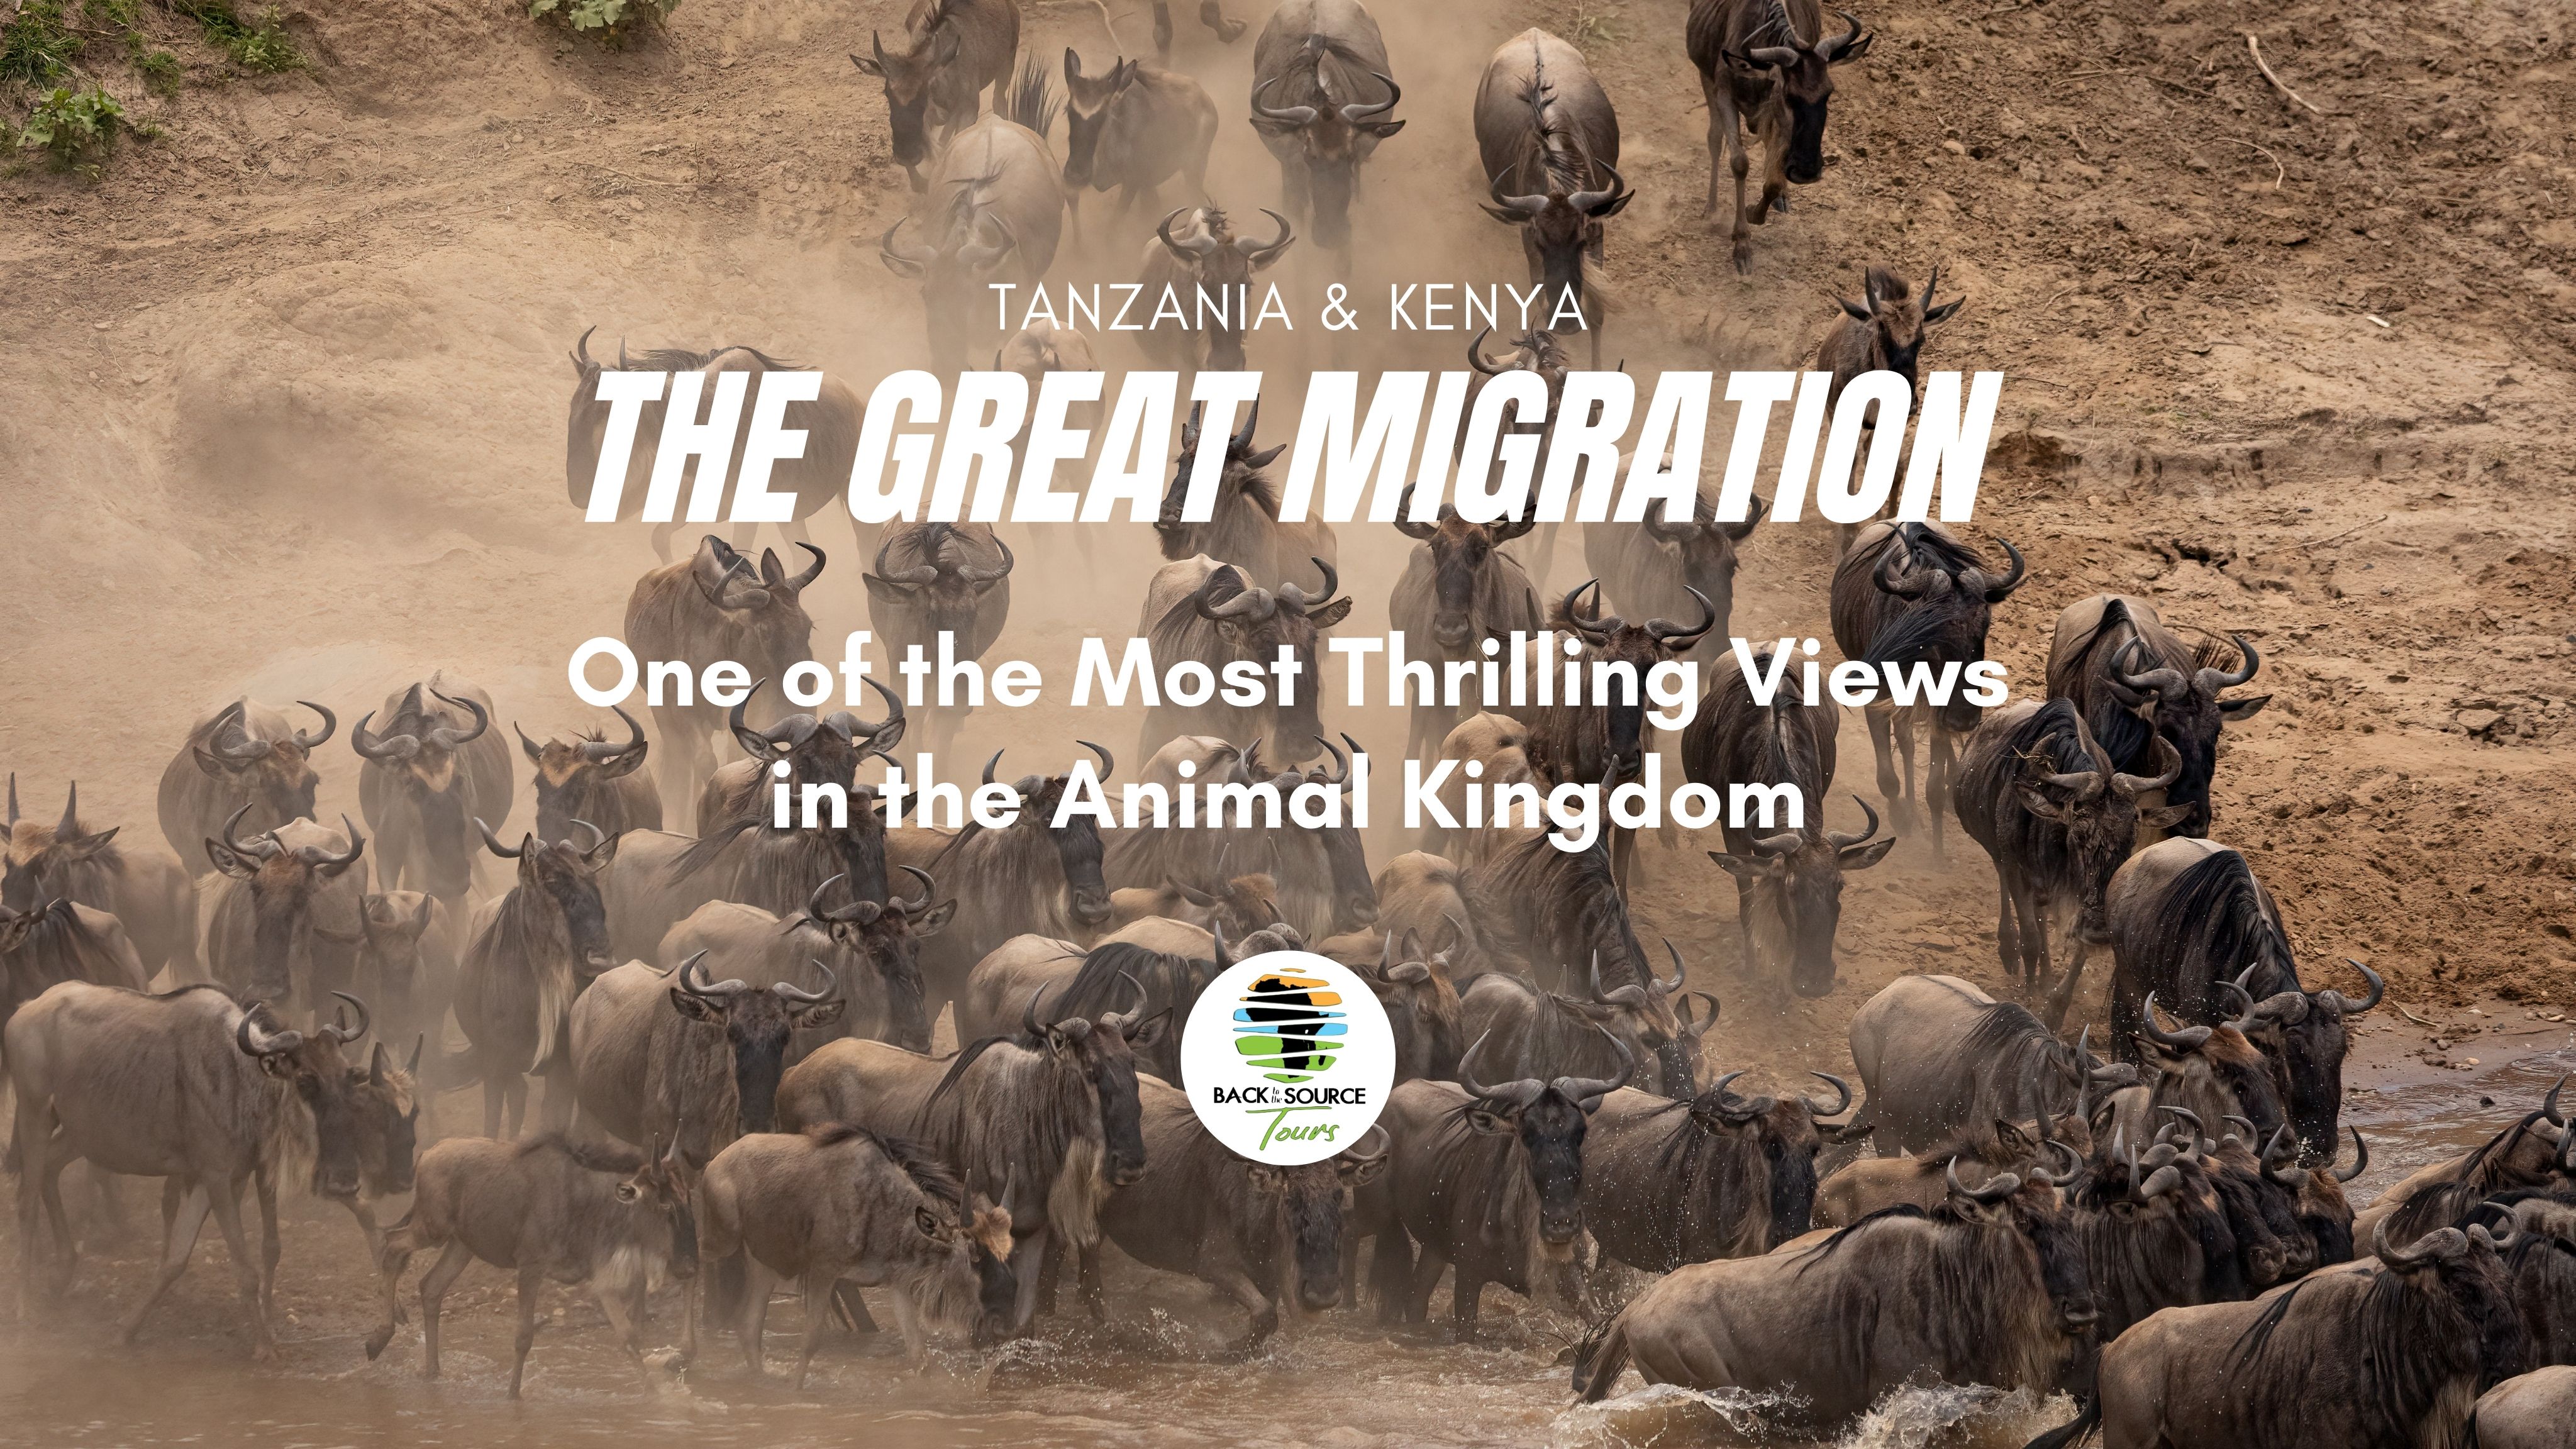 A massive animal migration is still happening in the Maasai Mara